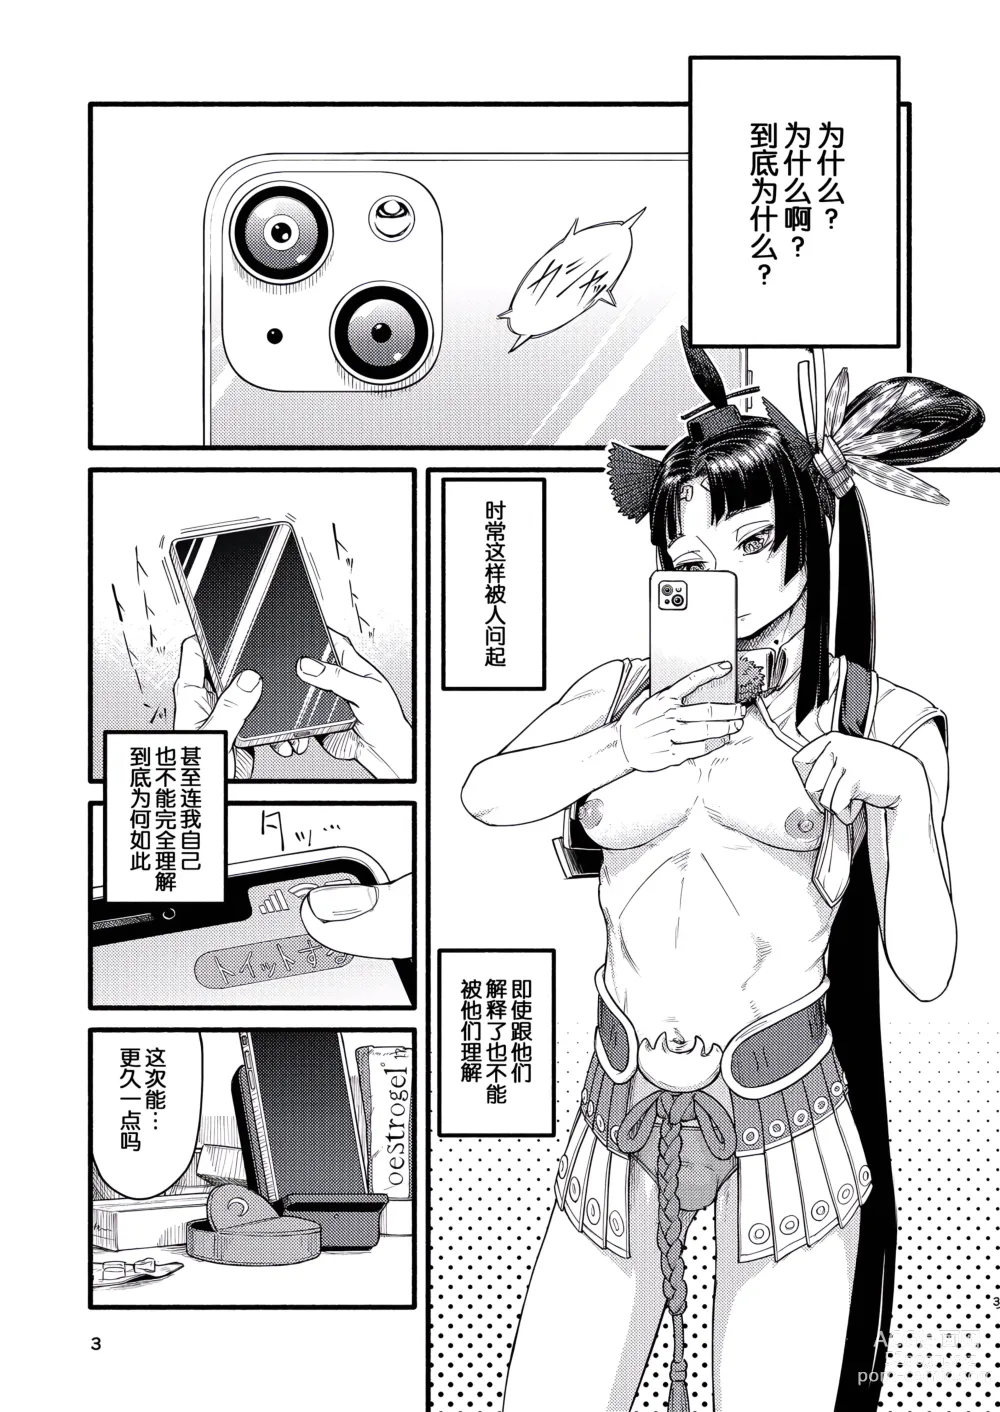 Page 3 of doujinshi MHD-02